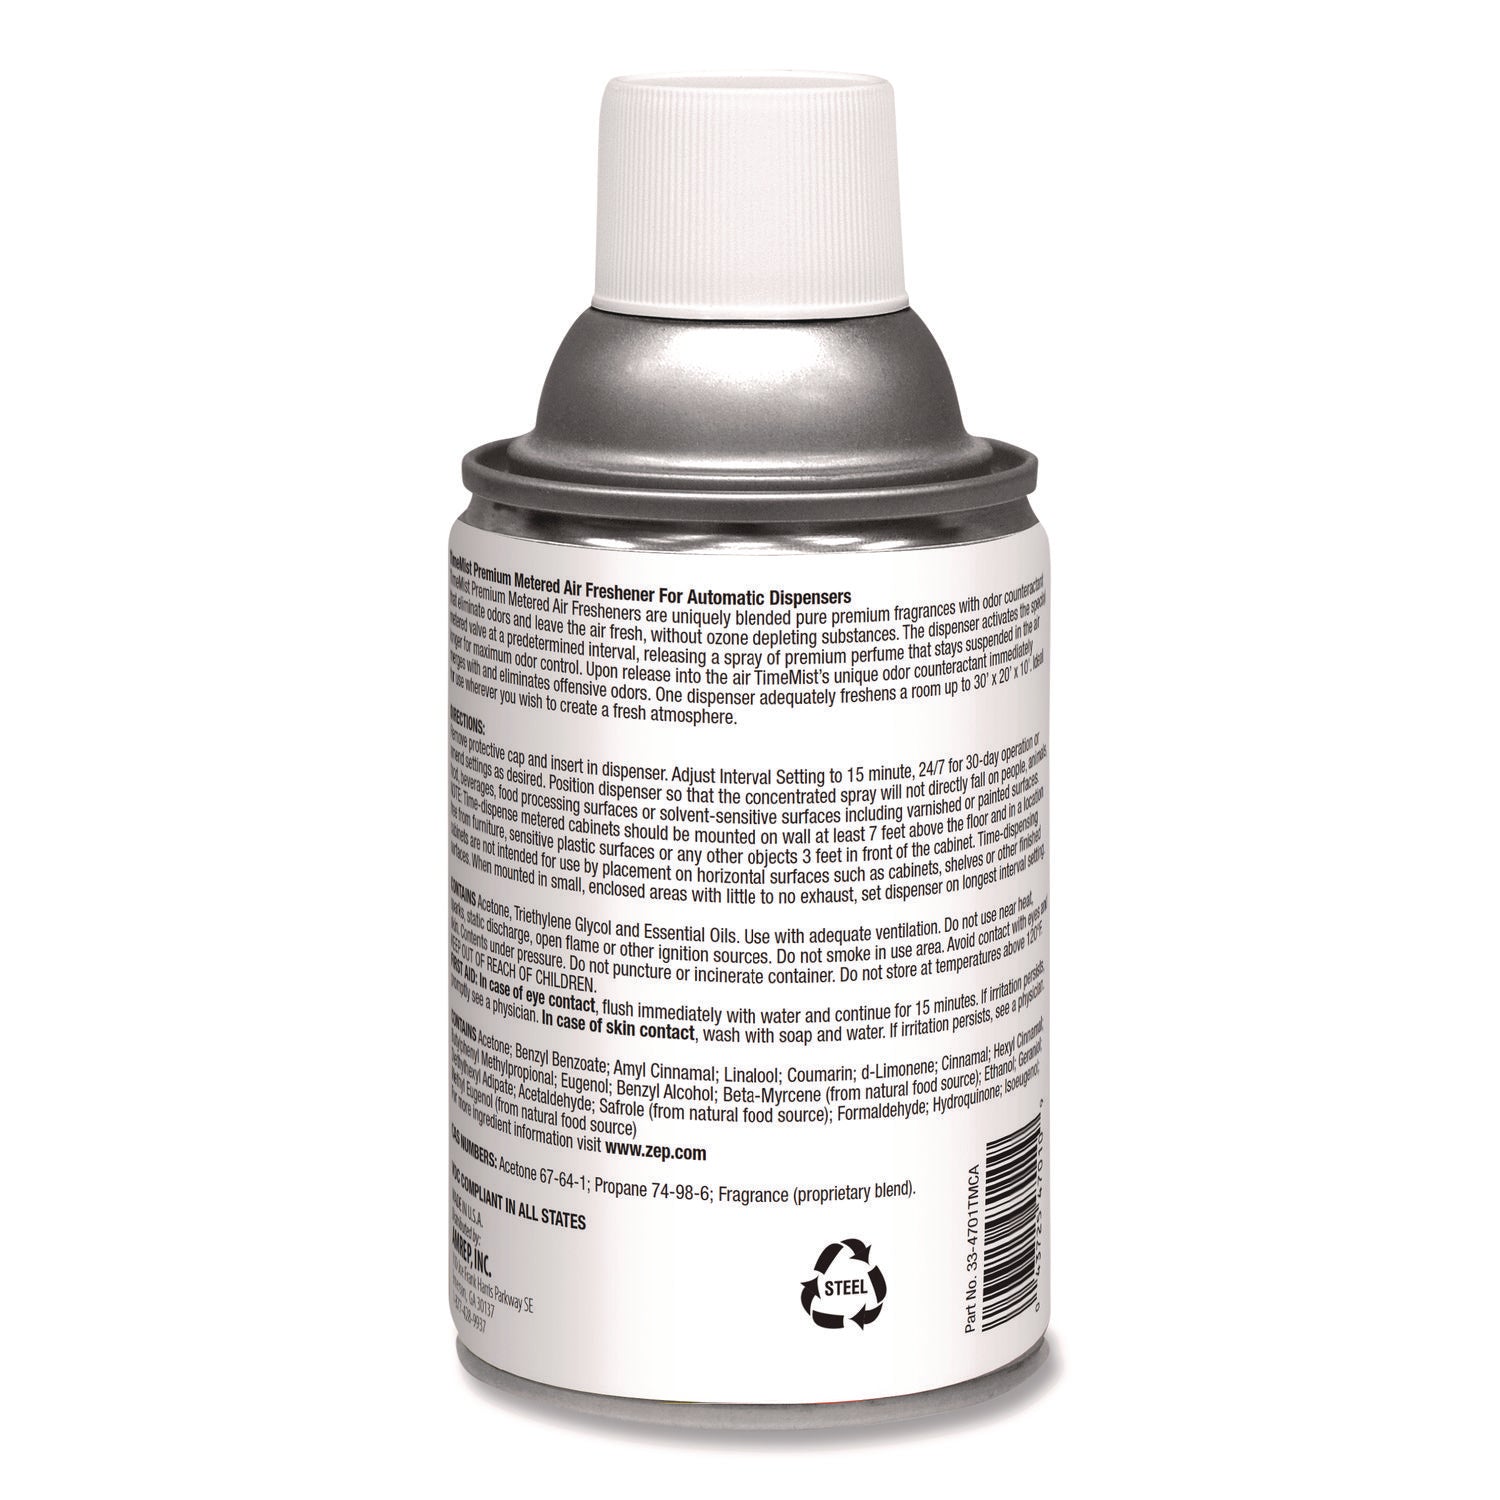 Premium Metered Air Freshener Refill, Dutch Apple and Spice, 6.6 oz Aerosol Spray - 2